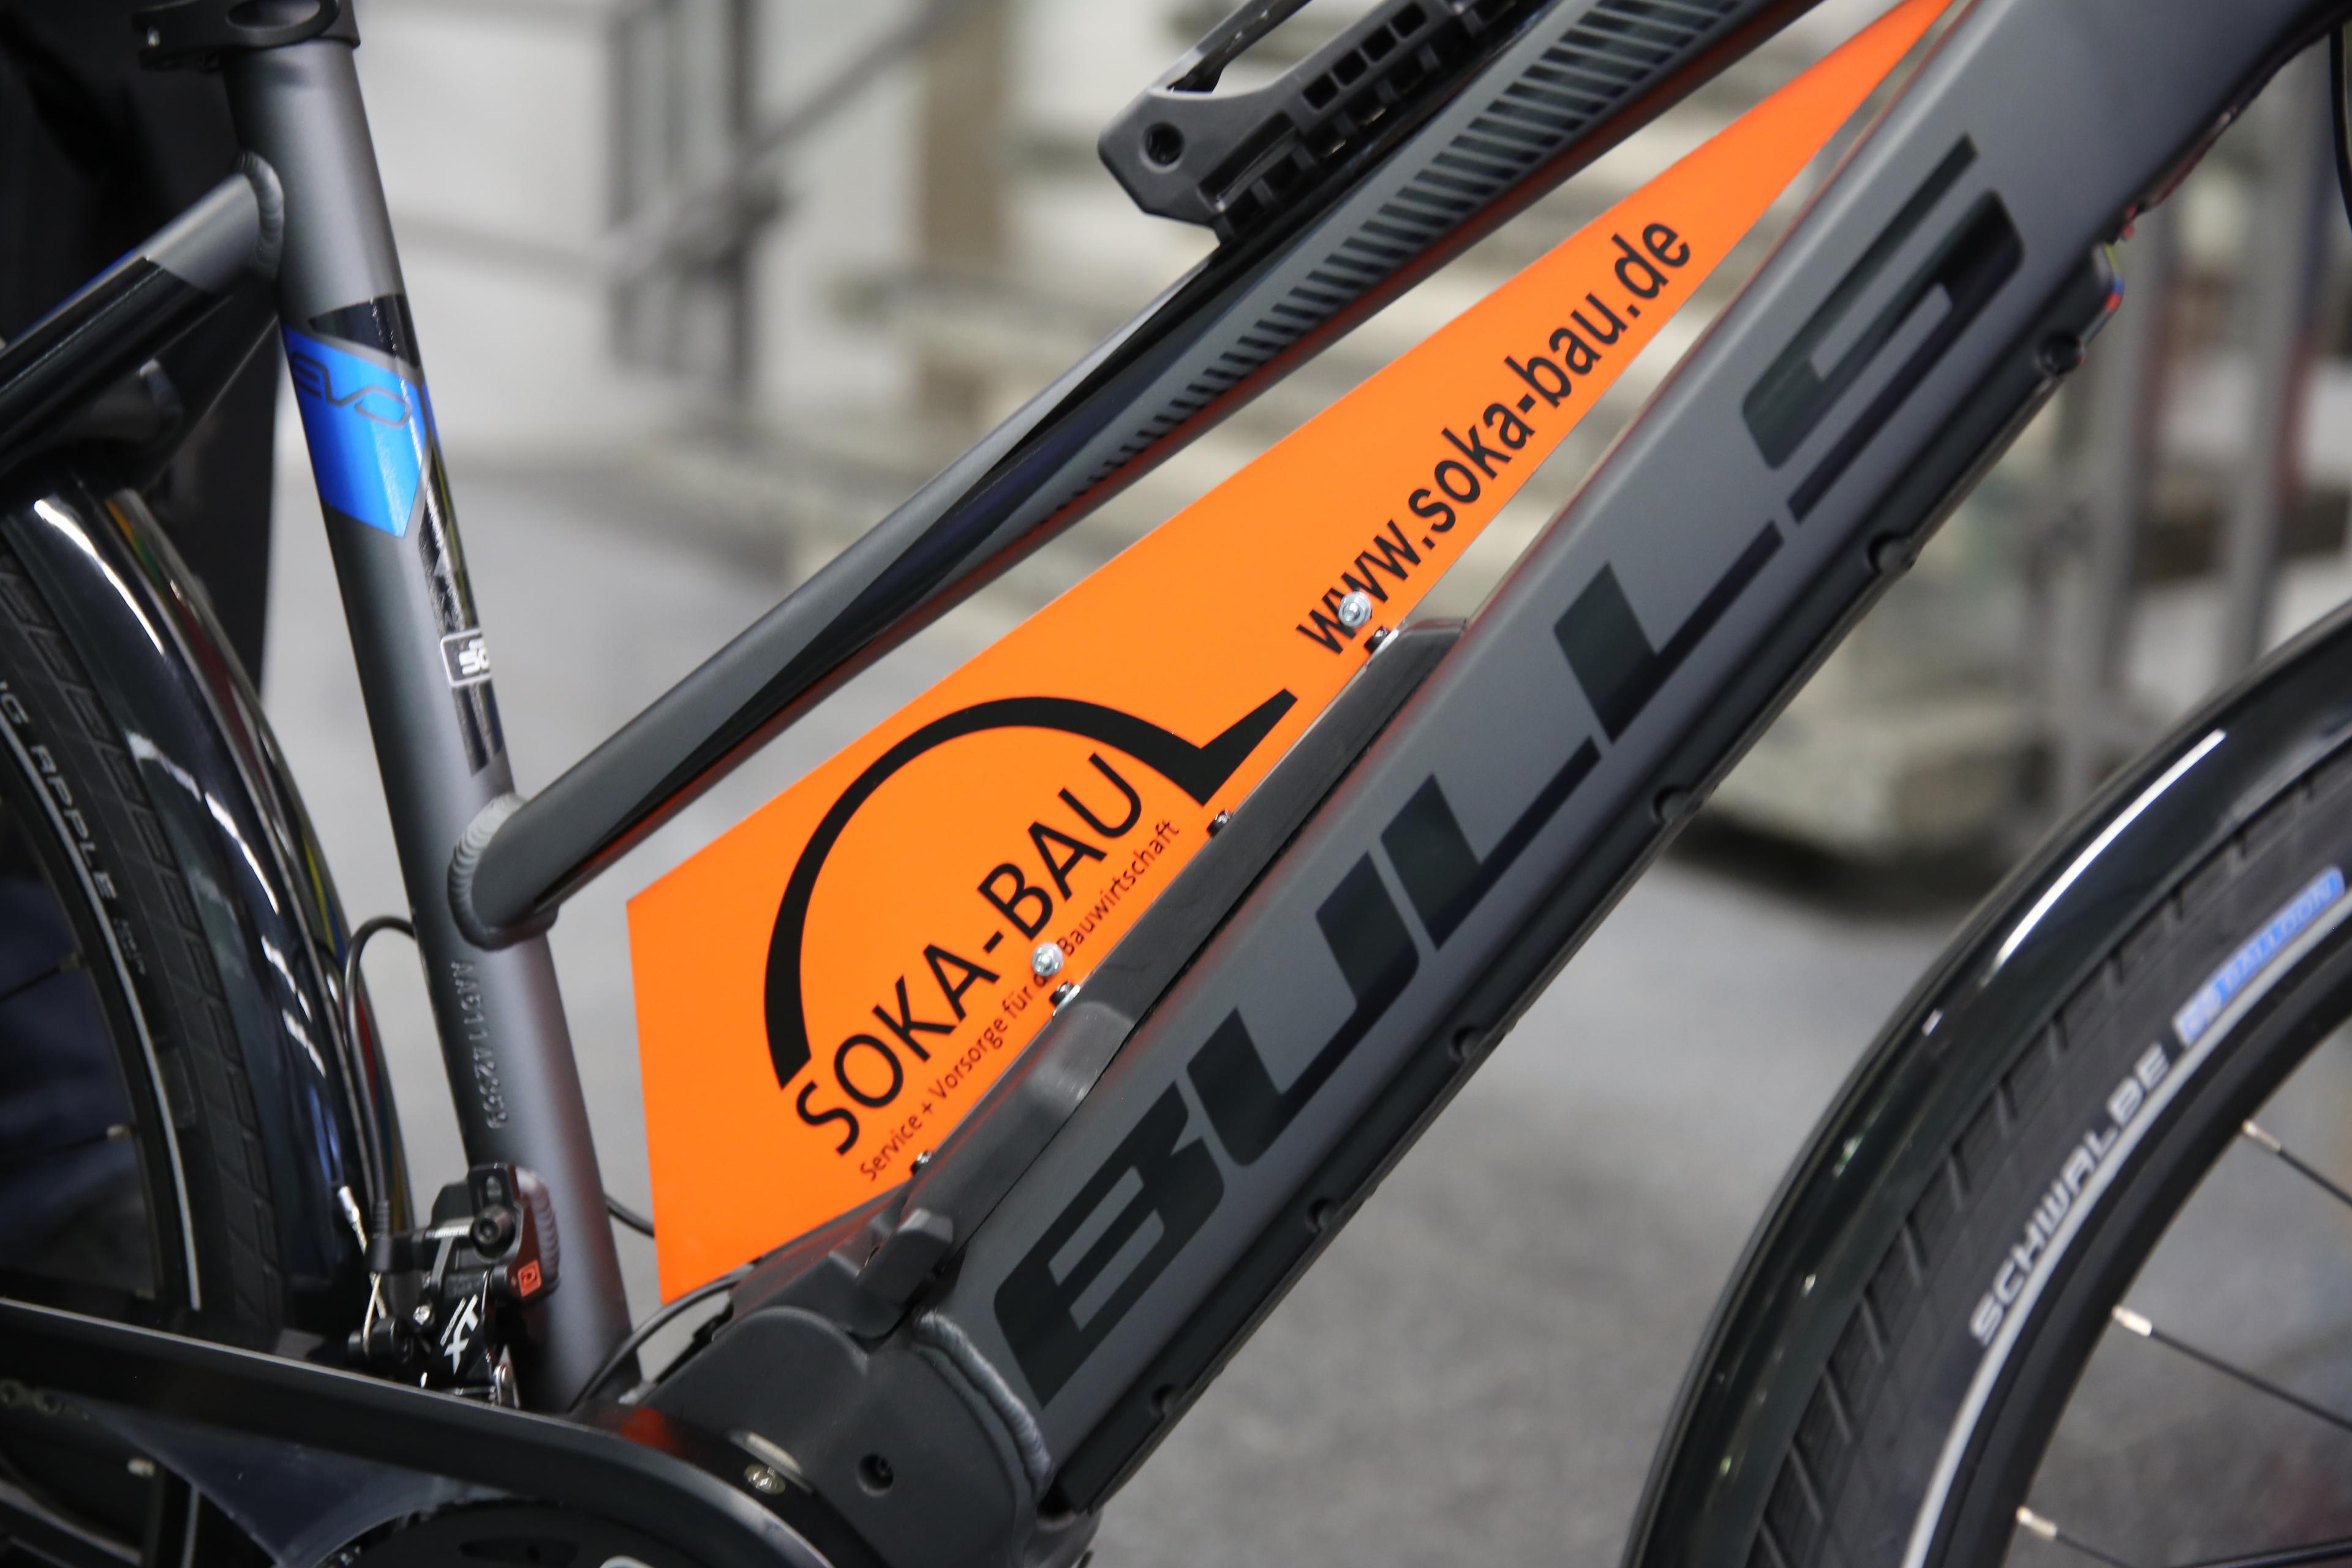 Rahmen eines E-Bikes mit Aufschrift "SOKA-Bau"